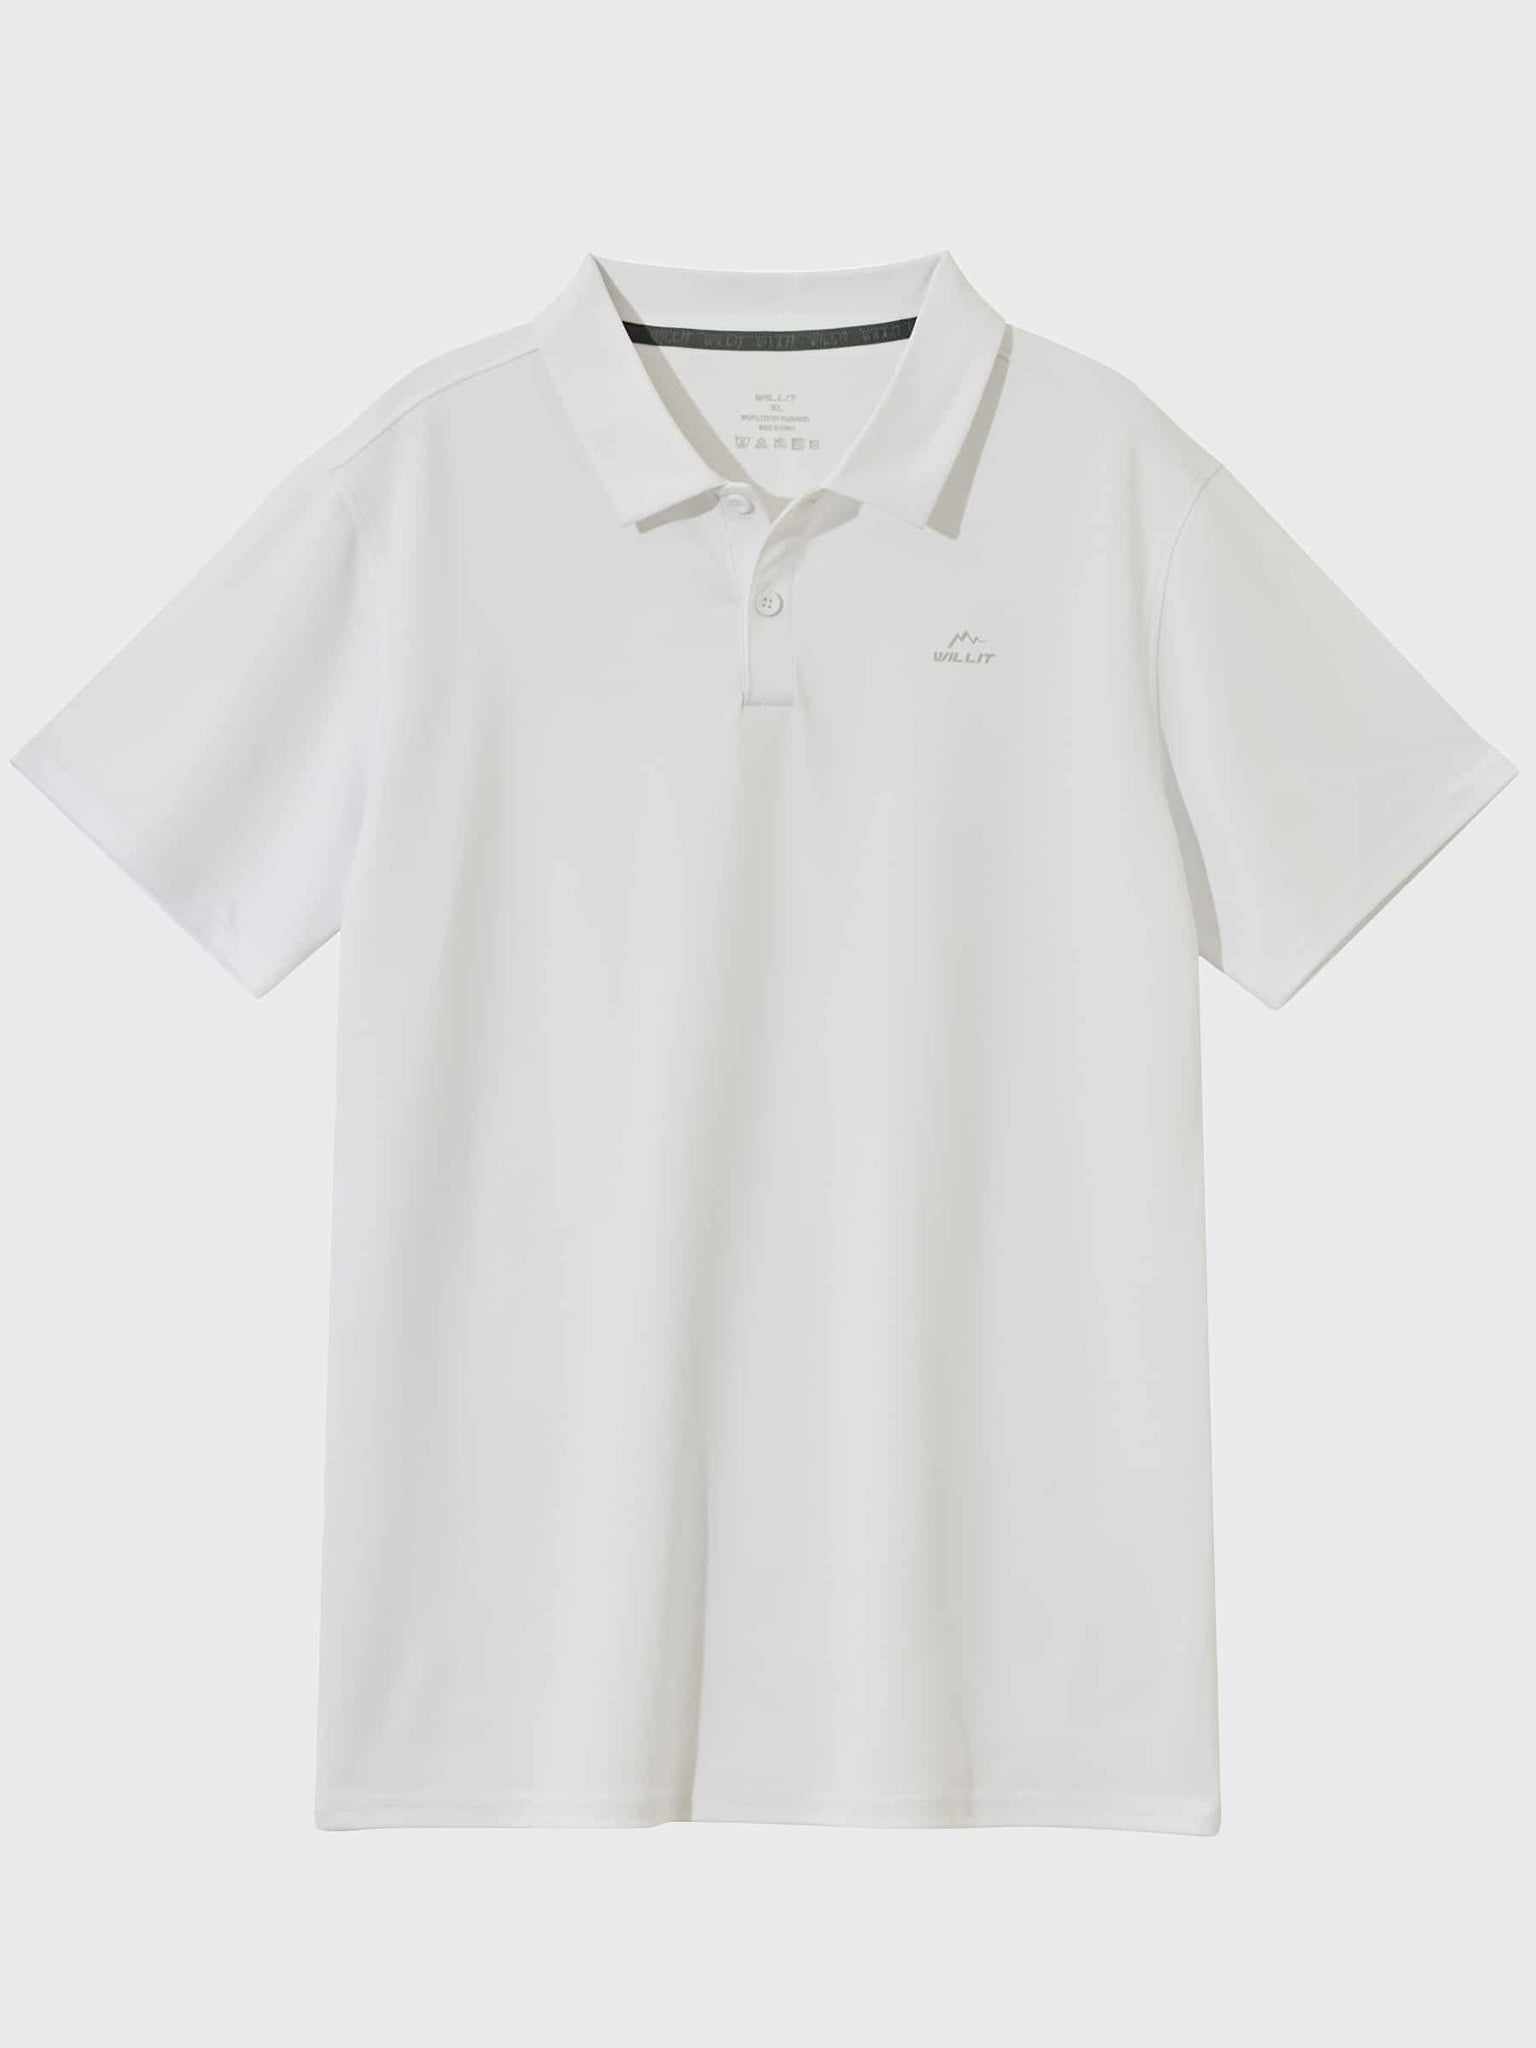 Youth Golf Polo Sun Shirts_White_laydown4